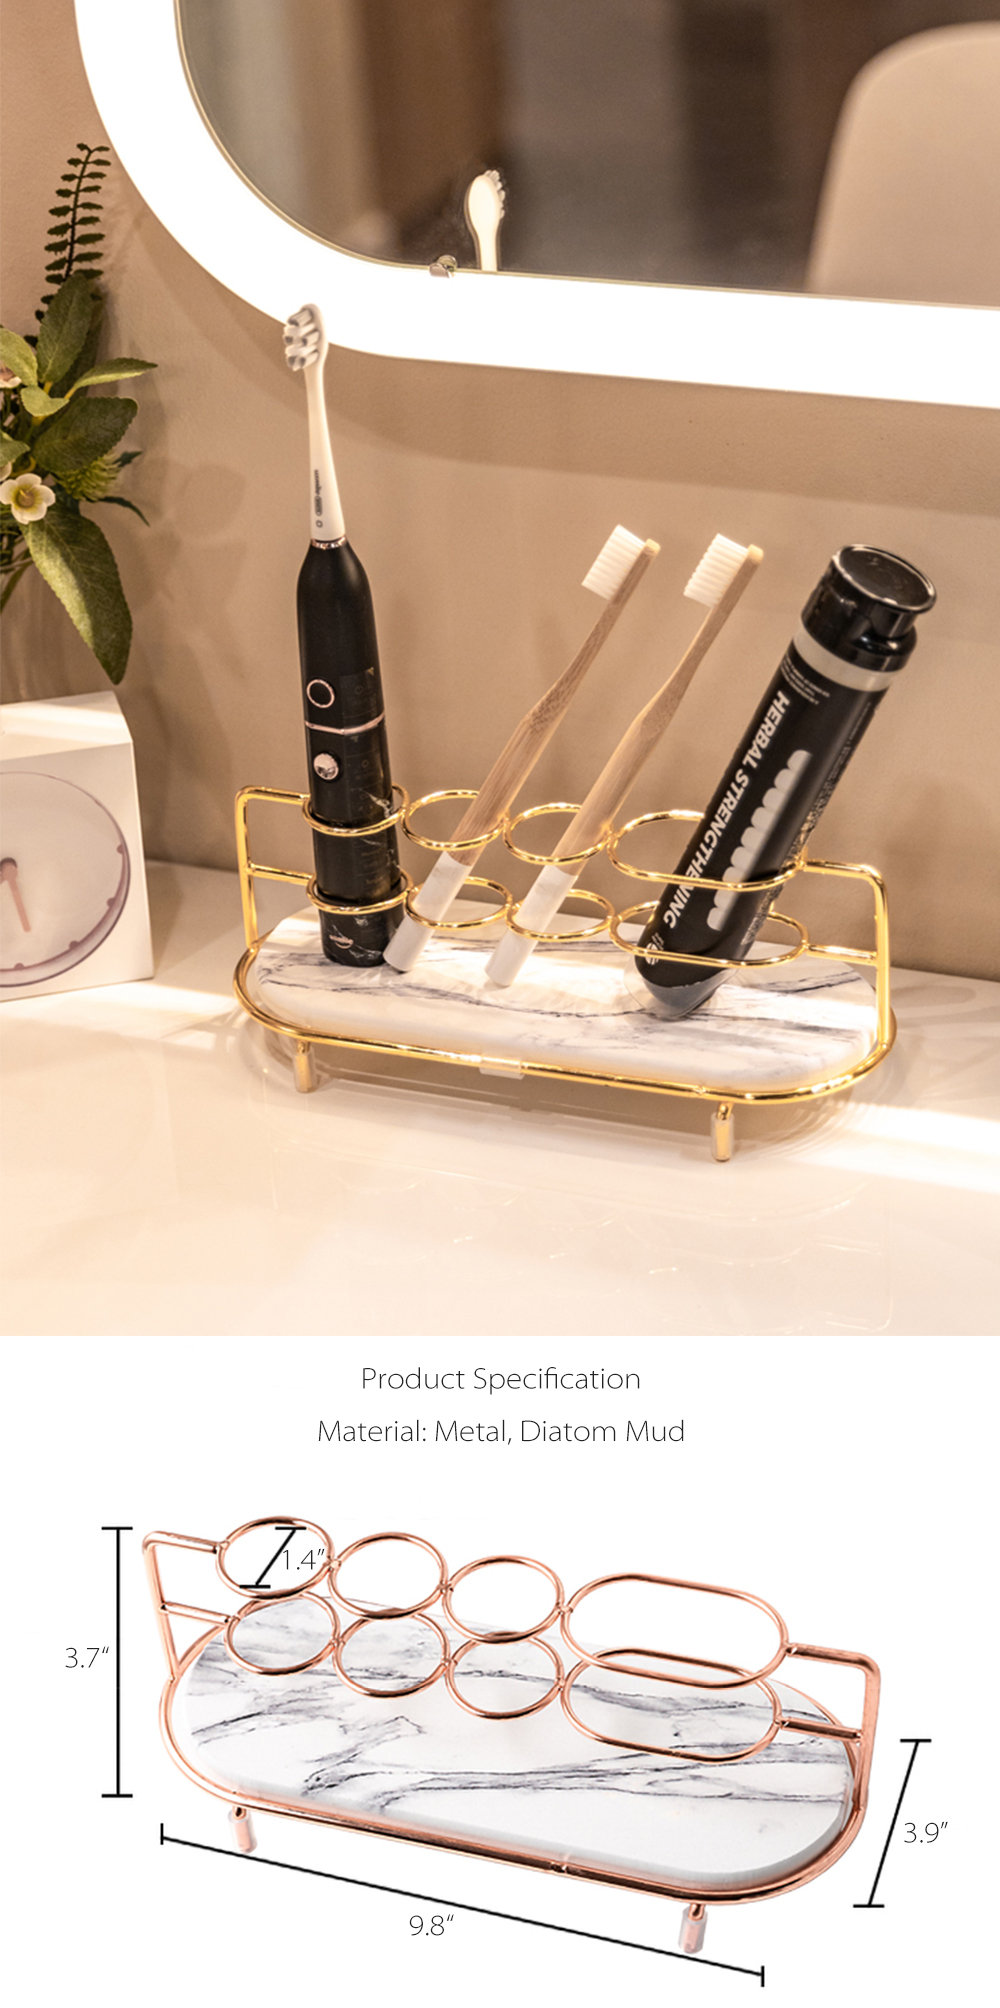 Toothbrush Rack With Diatom Mud Base Diatomite Earth Toothbrush Tray 4 Slot  Bathroom Countertop Toothbrushes Makeup